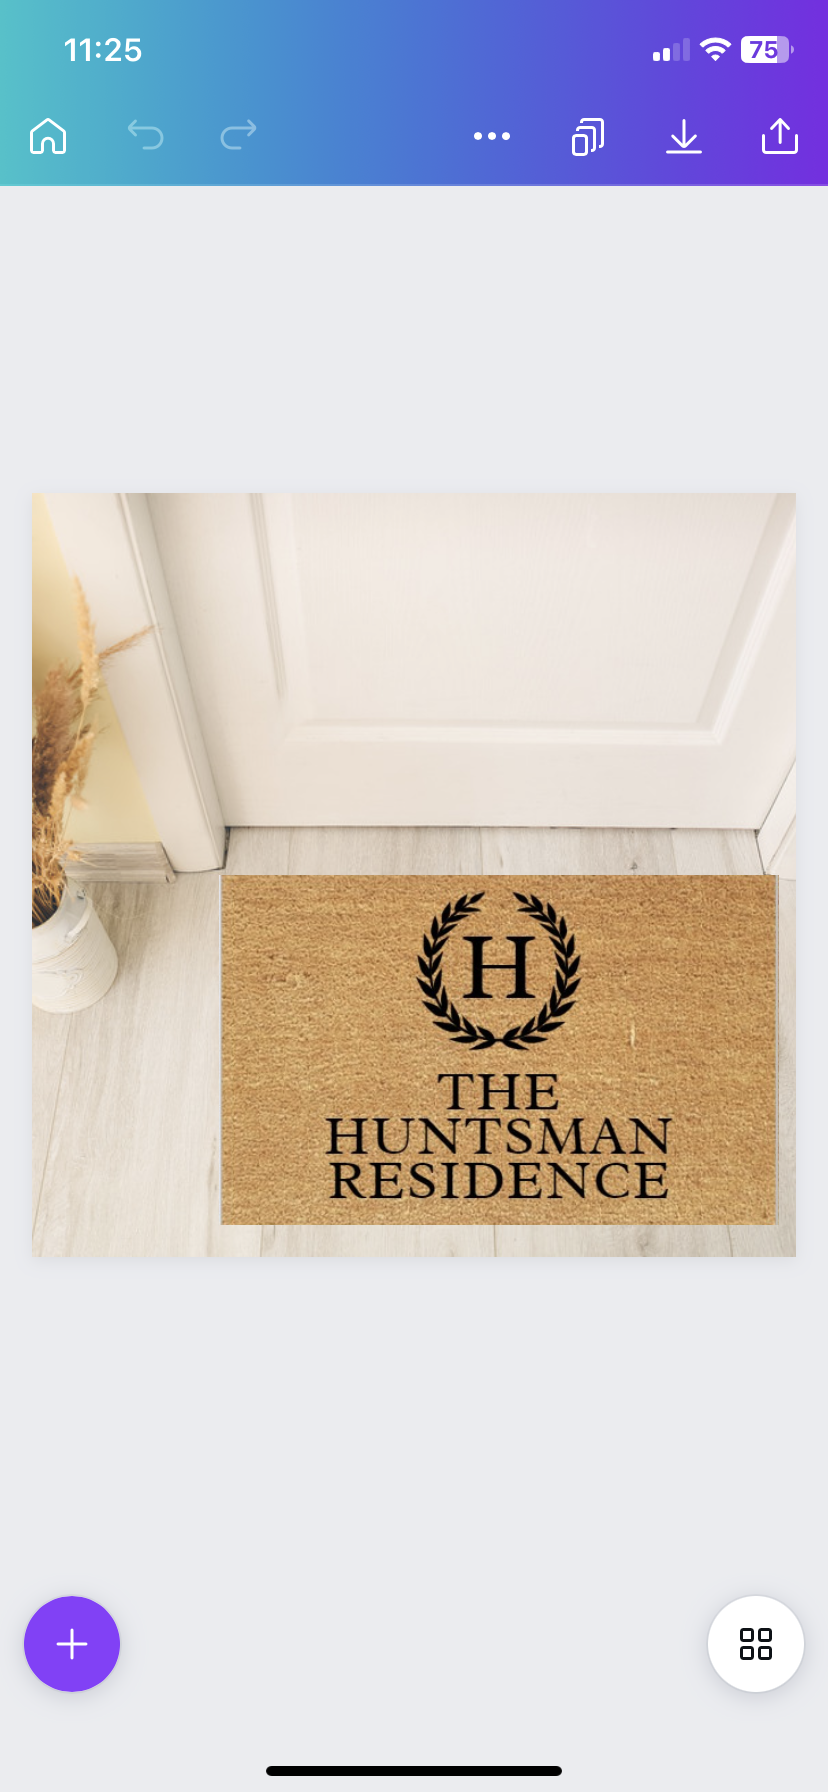 XXL The Residence Custom Doormat